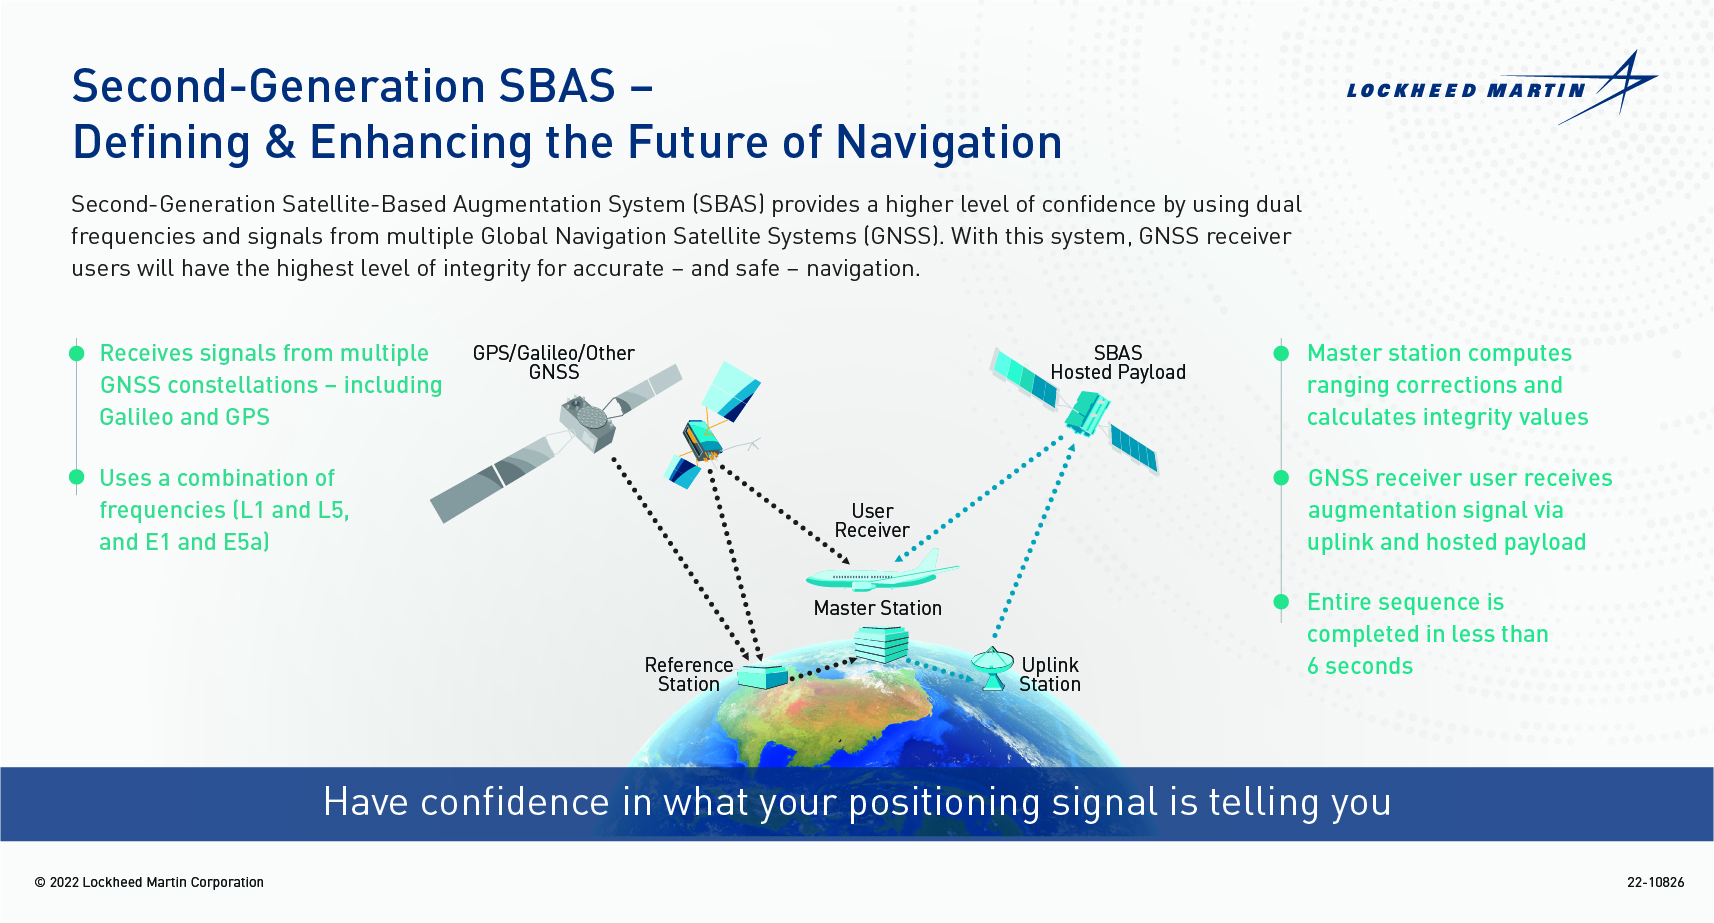 Second-Generation SBAS Infographic